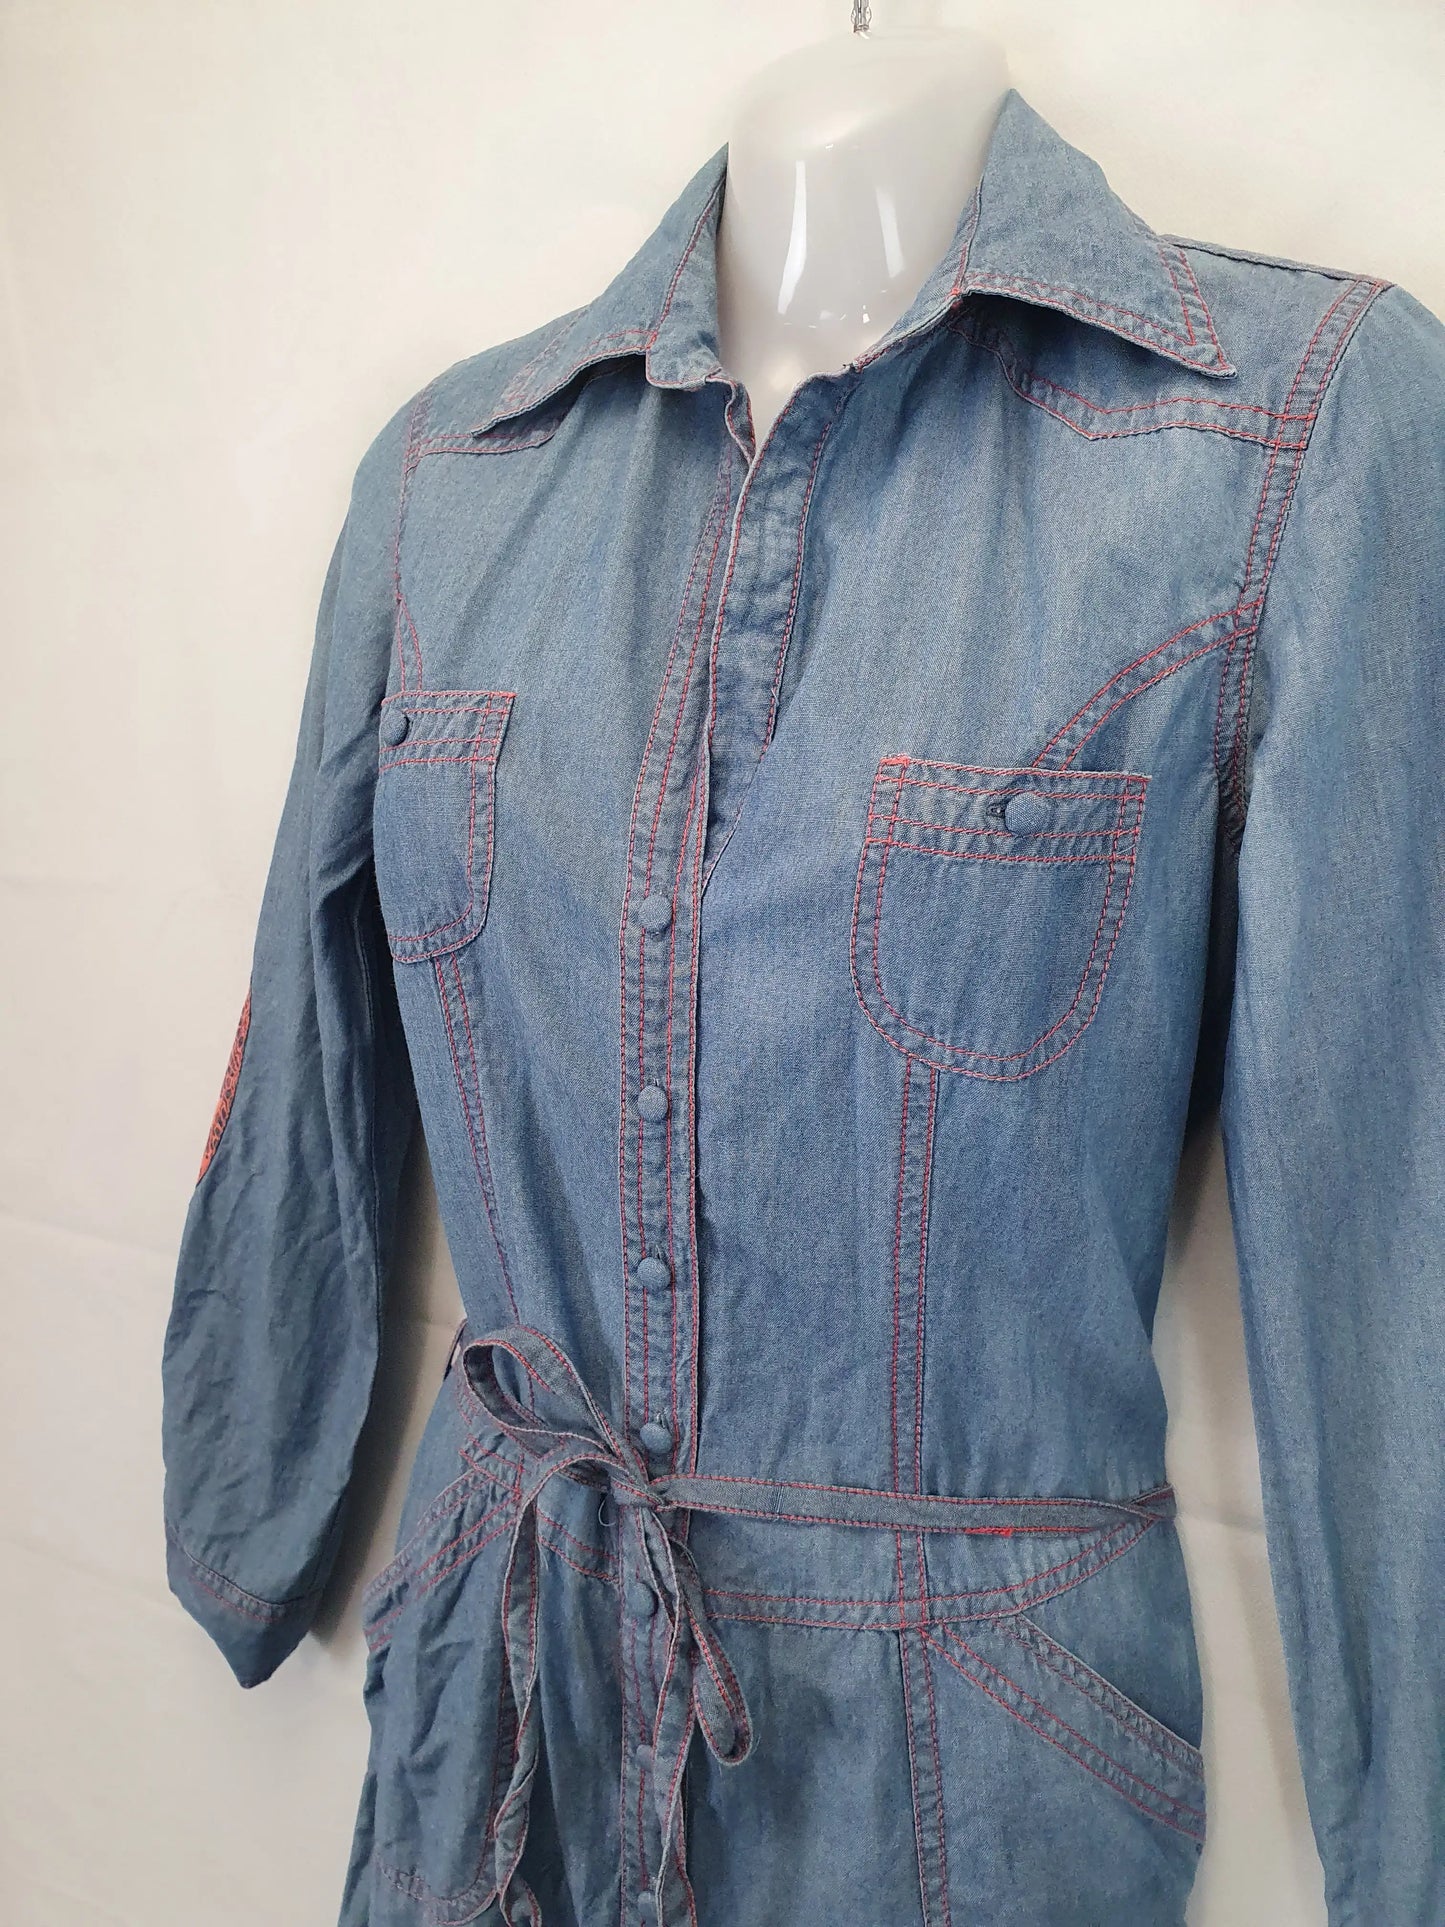 Boom Shankar Denim Buttoned Midi Dress Size 8 by SwapUp-Online Second Hand Store-Online Thrift Store